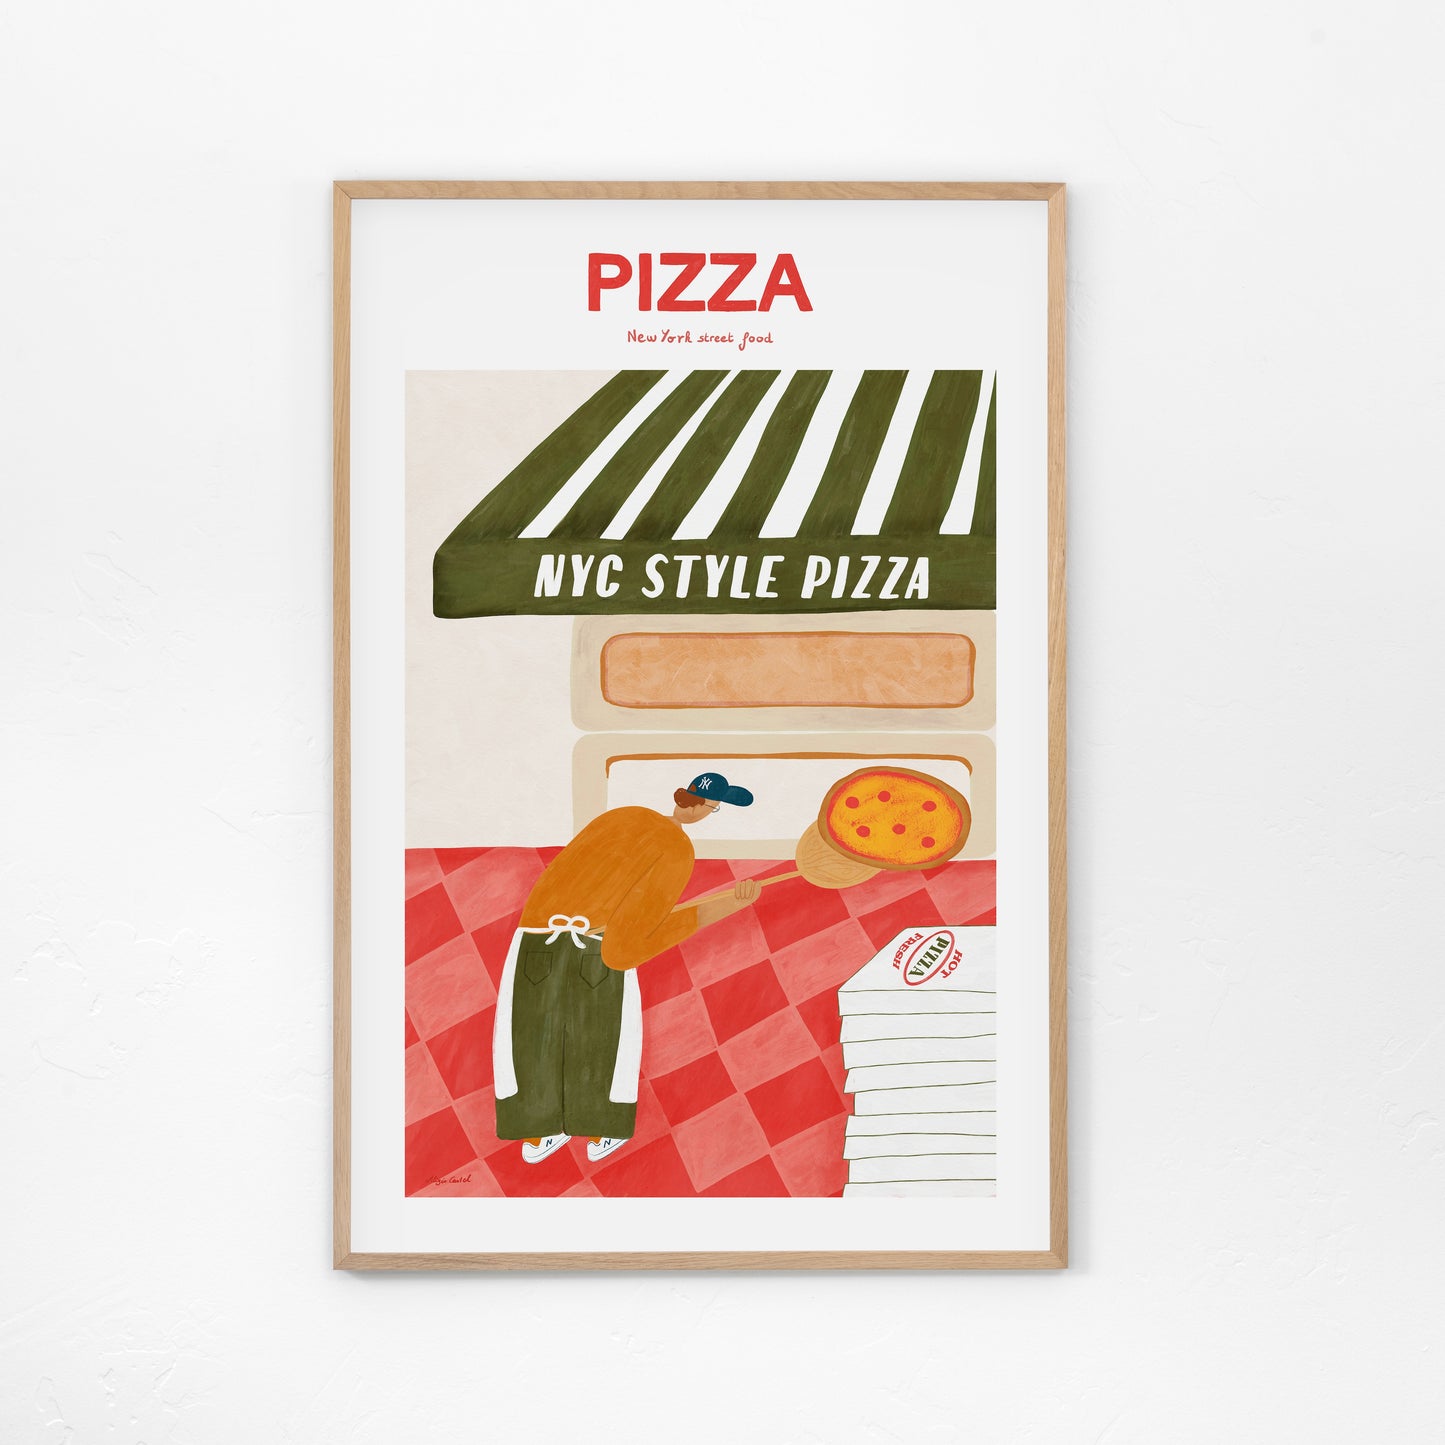 Pizza (New York Street Food)